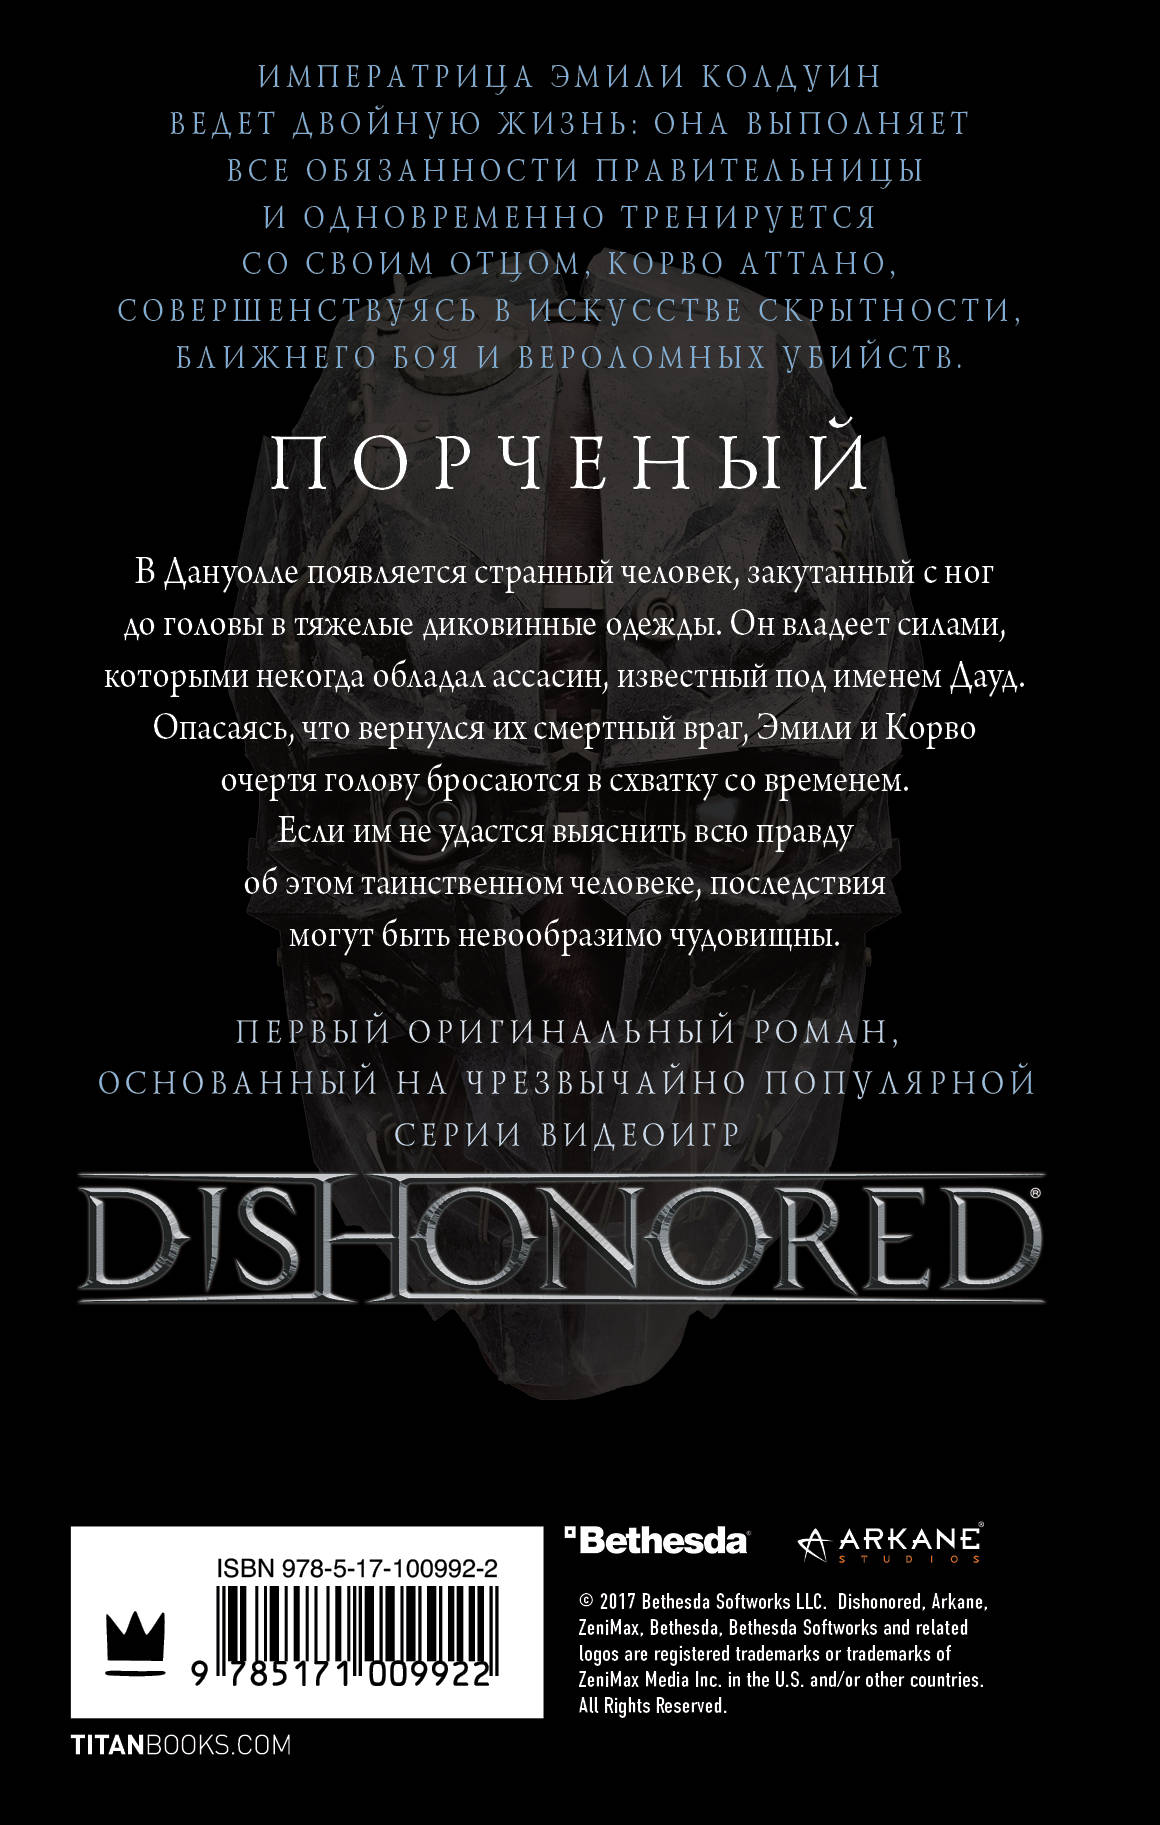 Dishonored. 